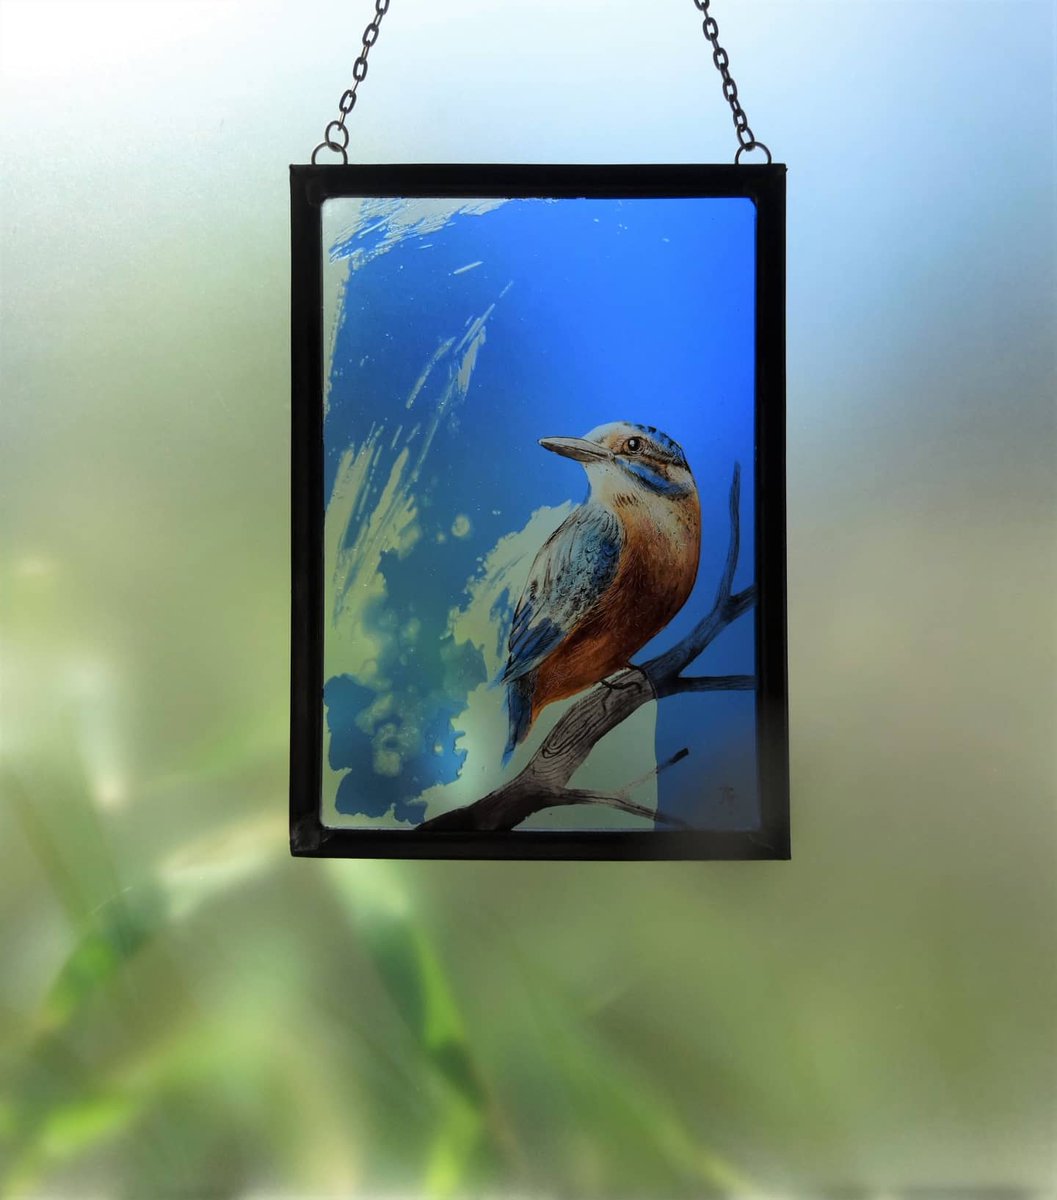 ⭐GIVEAWAY!⭐ over on my Instagram page 💖 
#giveaway #stainedglassart #stainedglass #birdart #Birds #paintedglass #oneoffpiece #uniquegifts #glassart #kingfisher #decorativeart